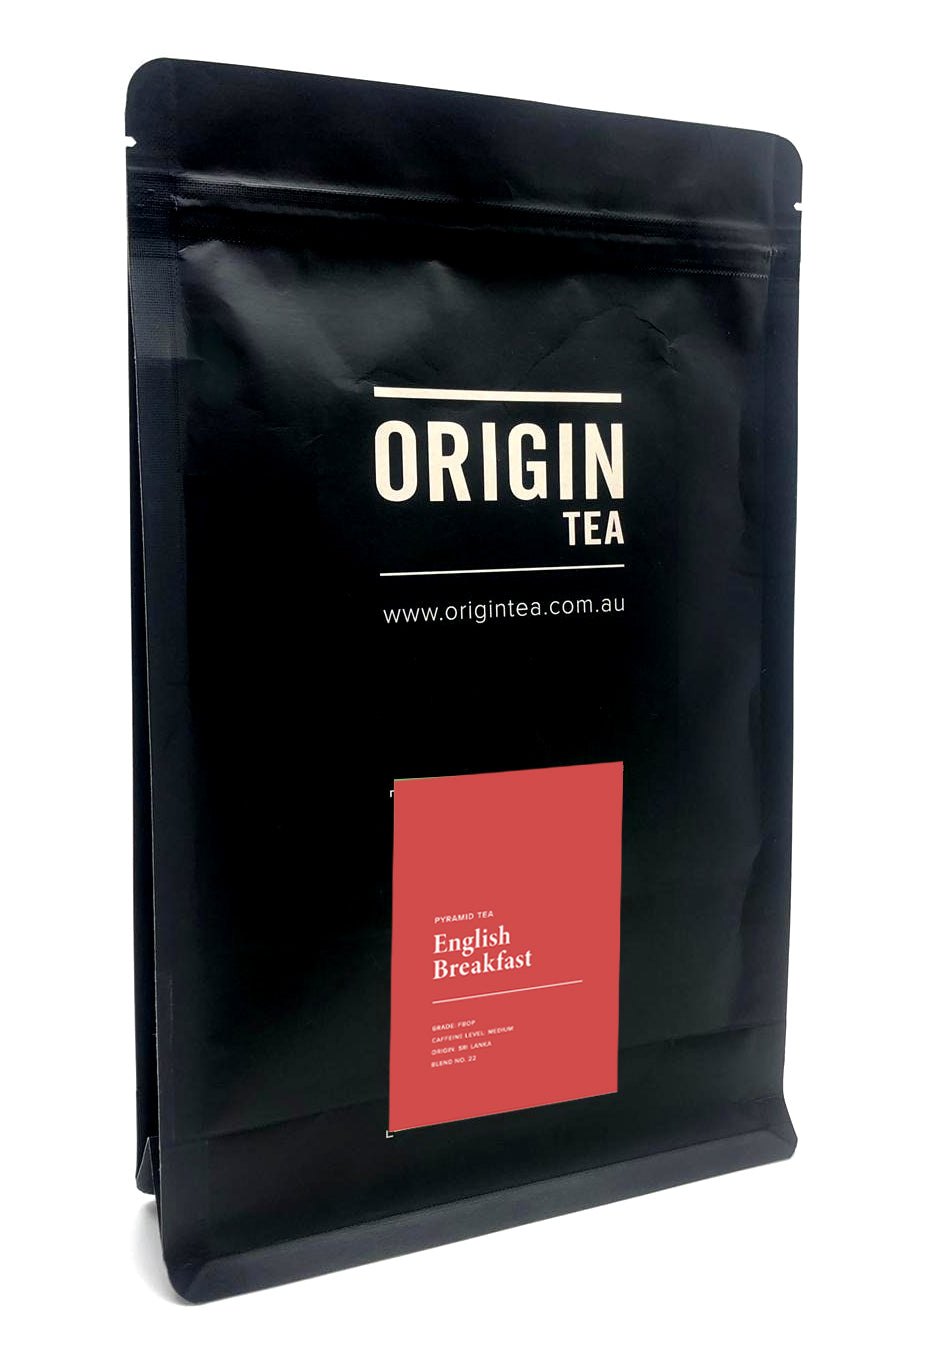 Origin Tea - Pyramid Tea Bags [100pk]